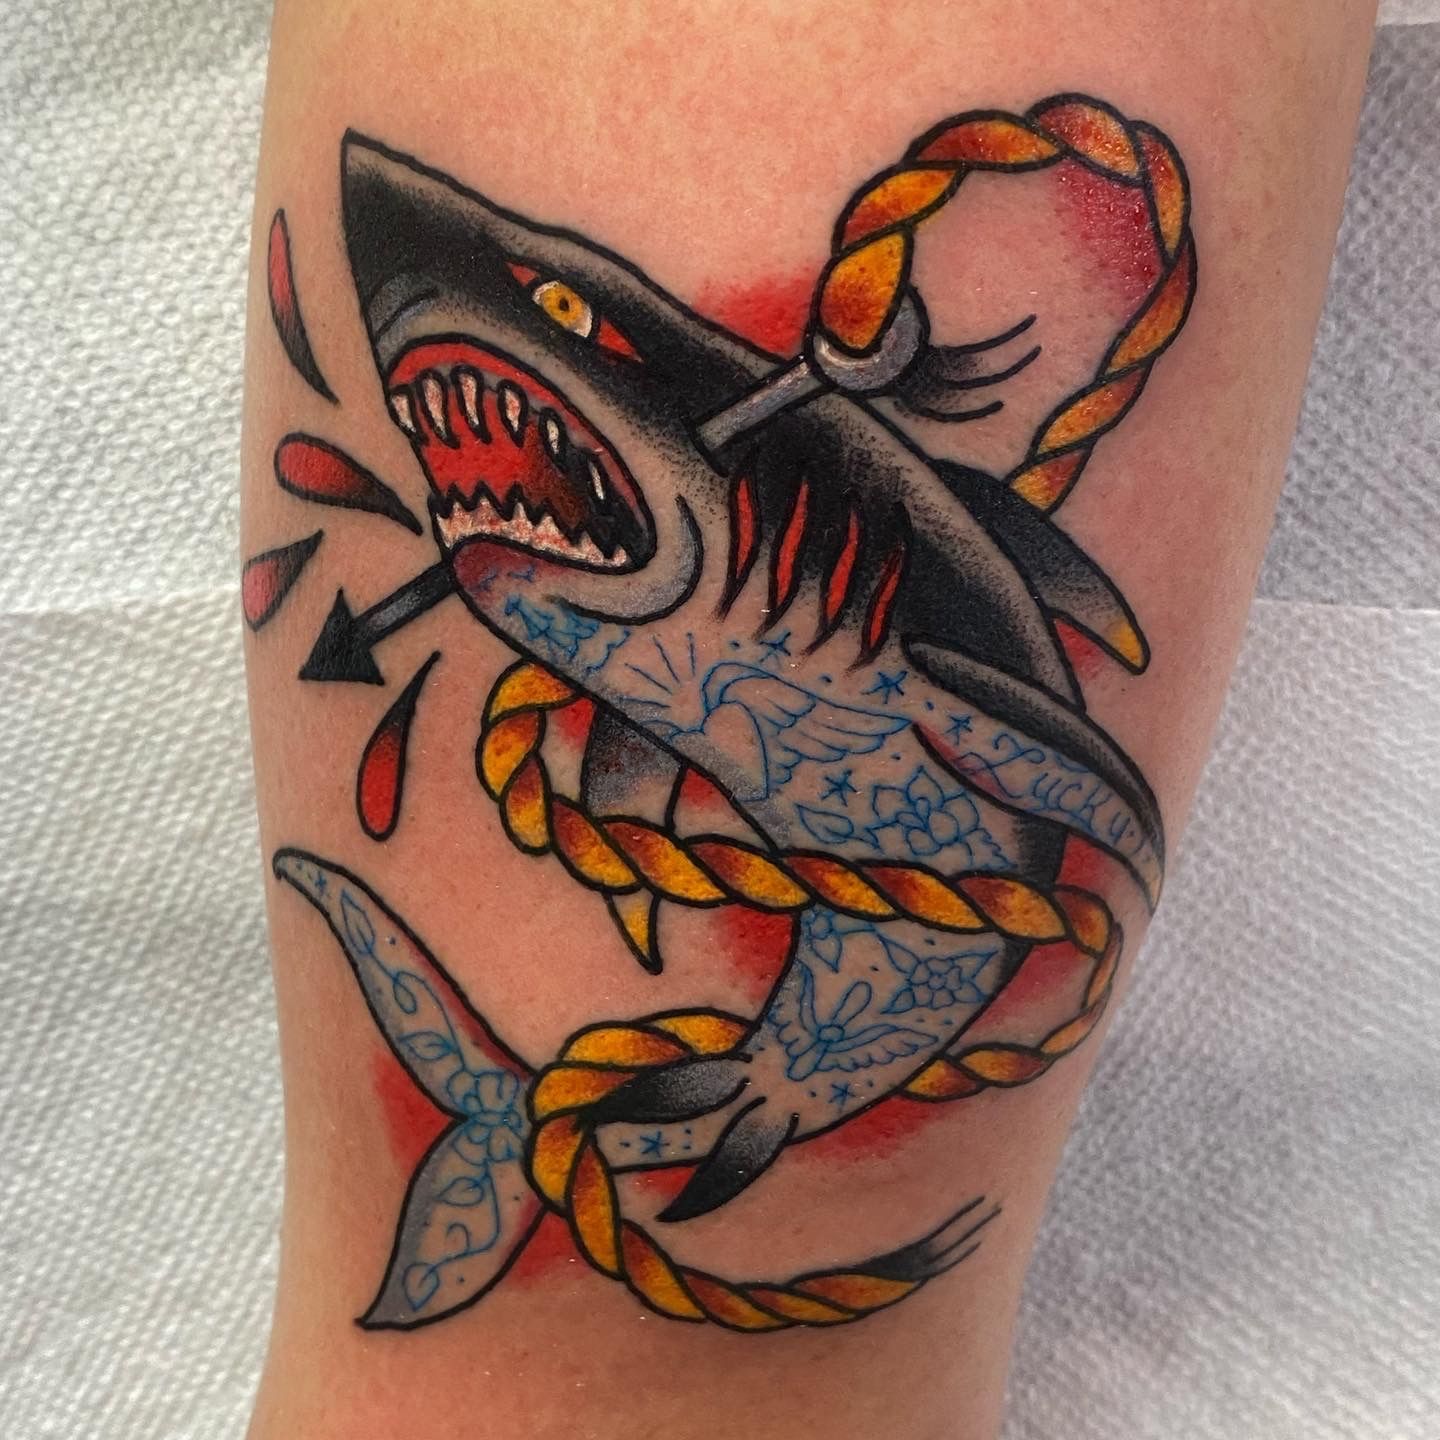 Shark tattoo by @ninja.v.herr at @trendkilltattoo in Celle, Germany  #ninjavherr #trendkilltattoo #celle #germany #sharktattoo | Instagram